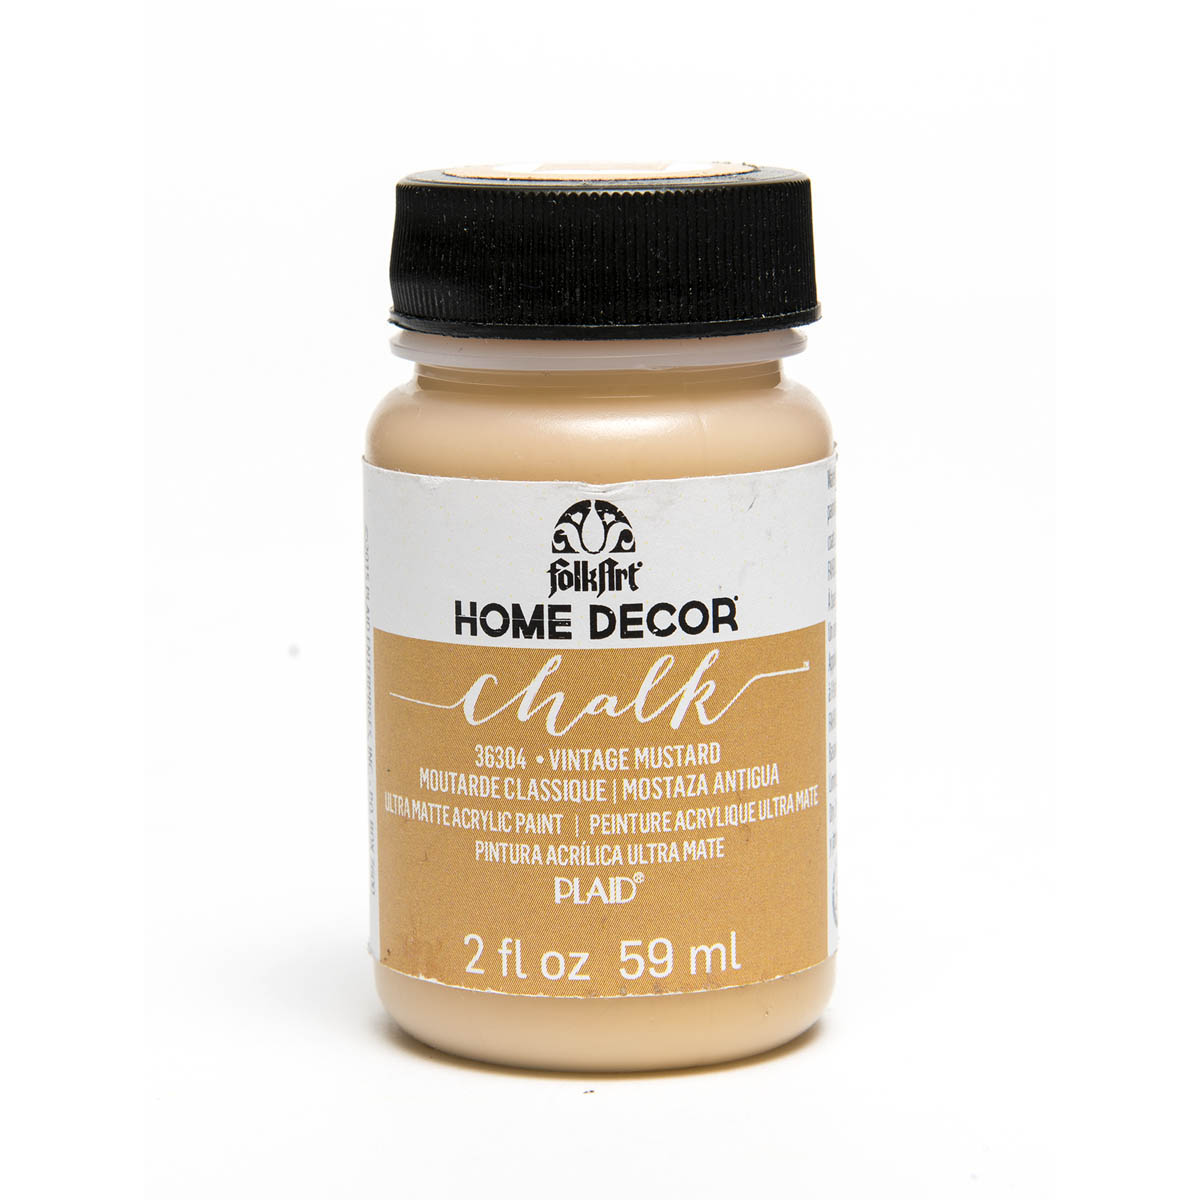 FolkArt Home Decor Chalk - Vintage Mustard, 2 oz. - 36304